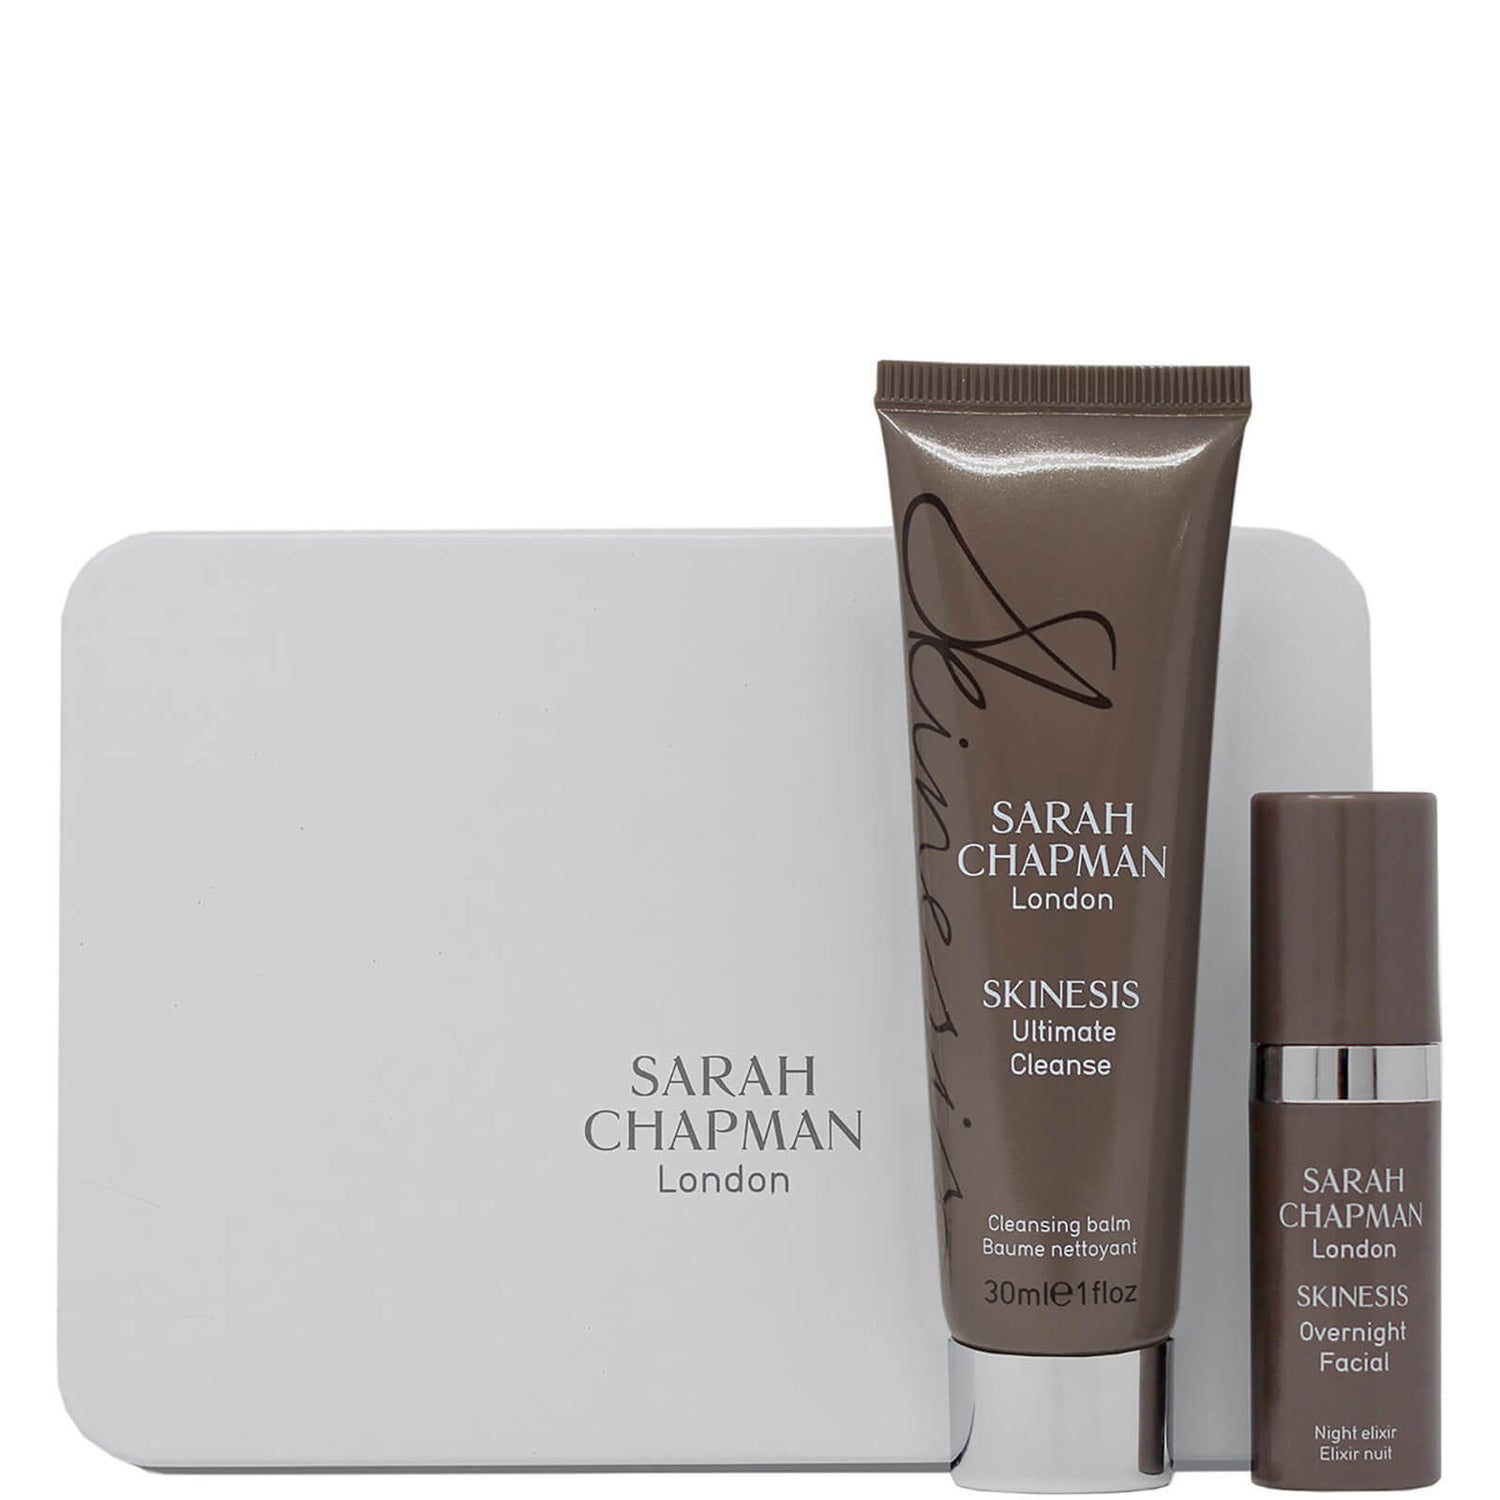 Sarah Chapman Skinesis Cleanse and Glow Gift Set (Worth £37.50)